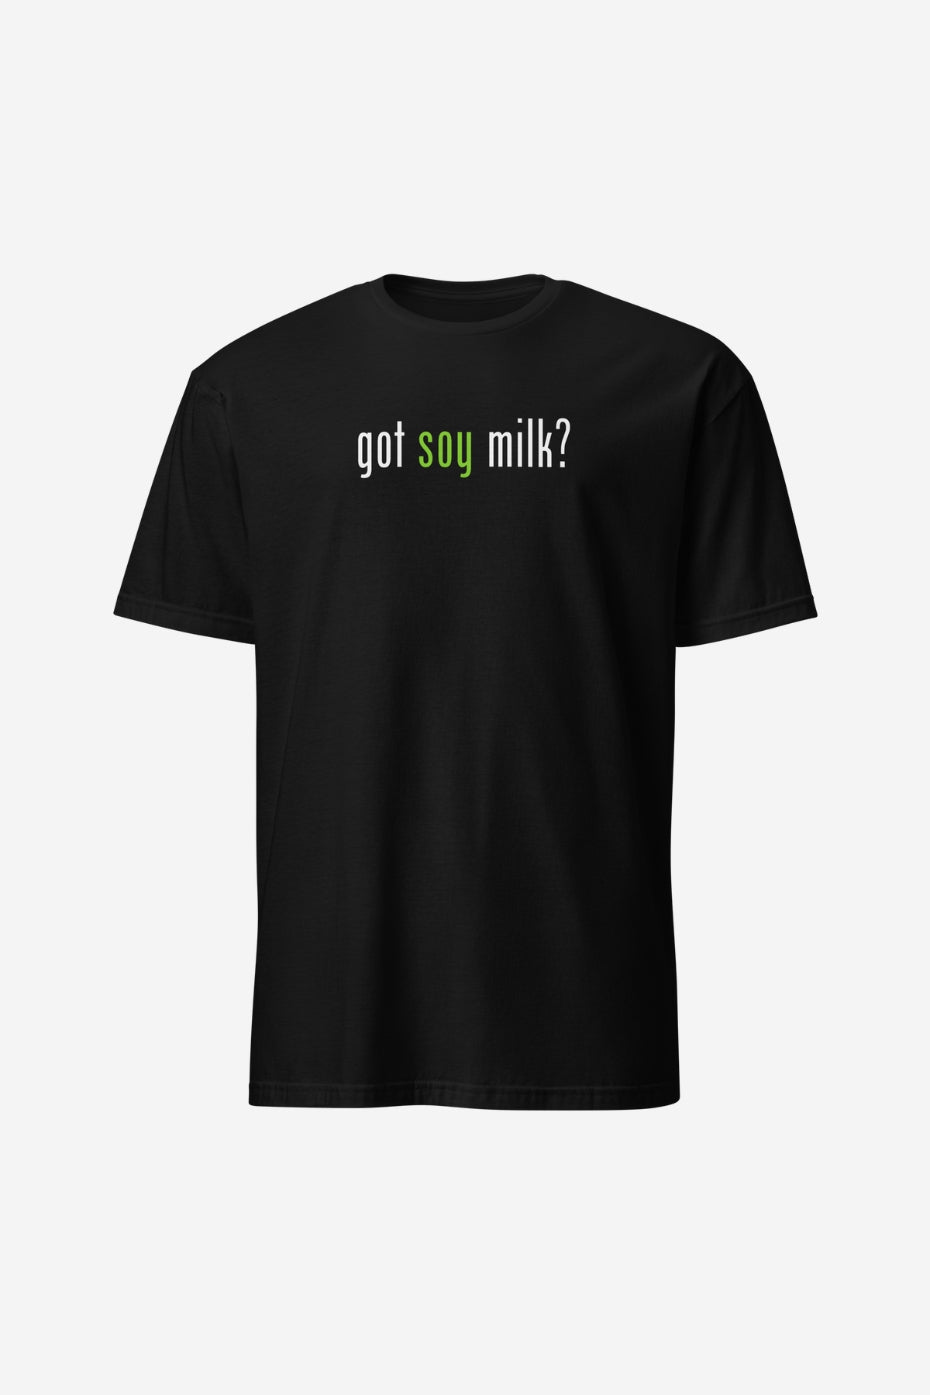 Got Soy Milk? Unisex T-Shirt